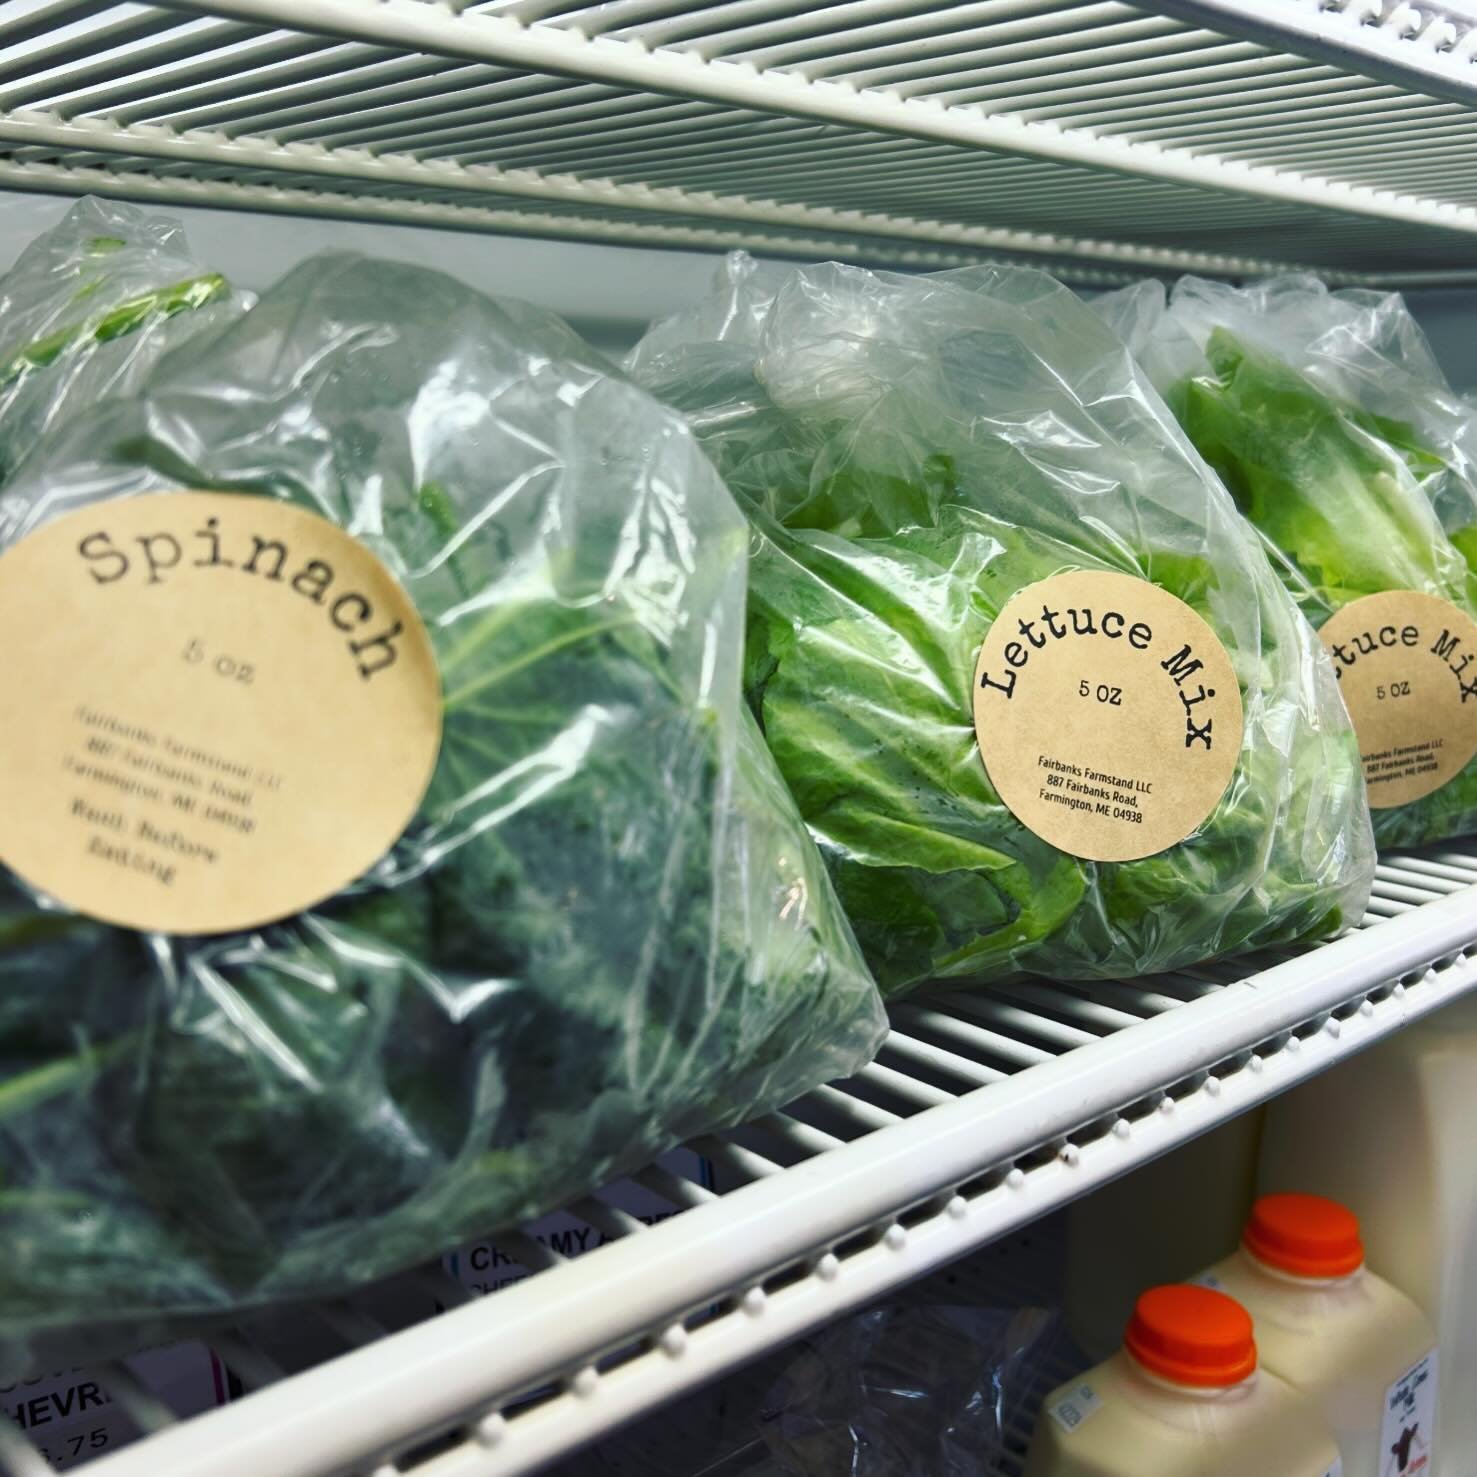 THURSDAY! Fresh Greens Alert 🚨🚨🚨 spinach, lettuce and tatsoi from @fairbanks_farmstand 🥬🥬🥬